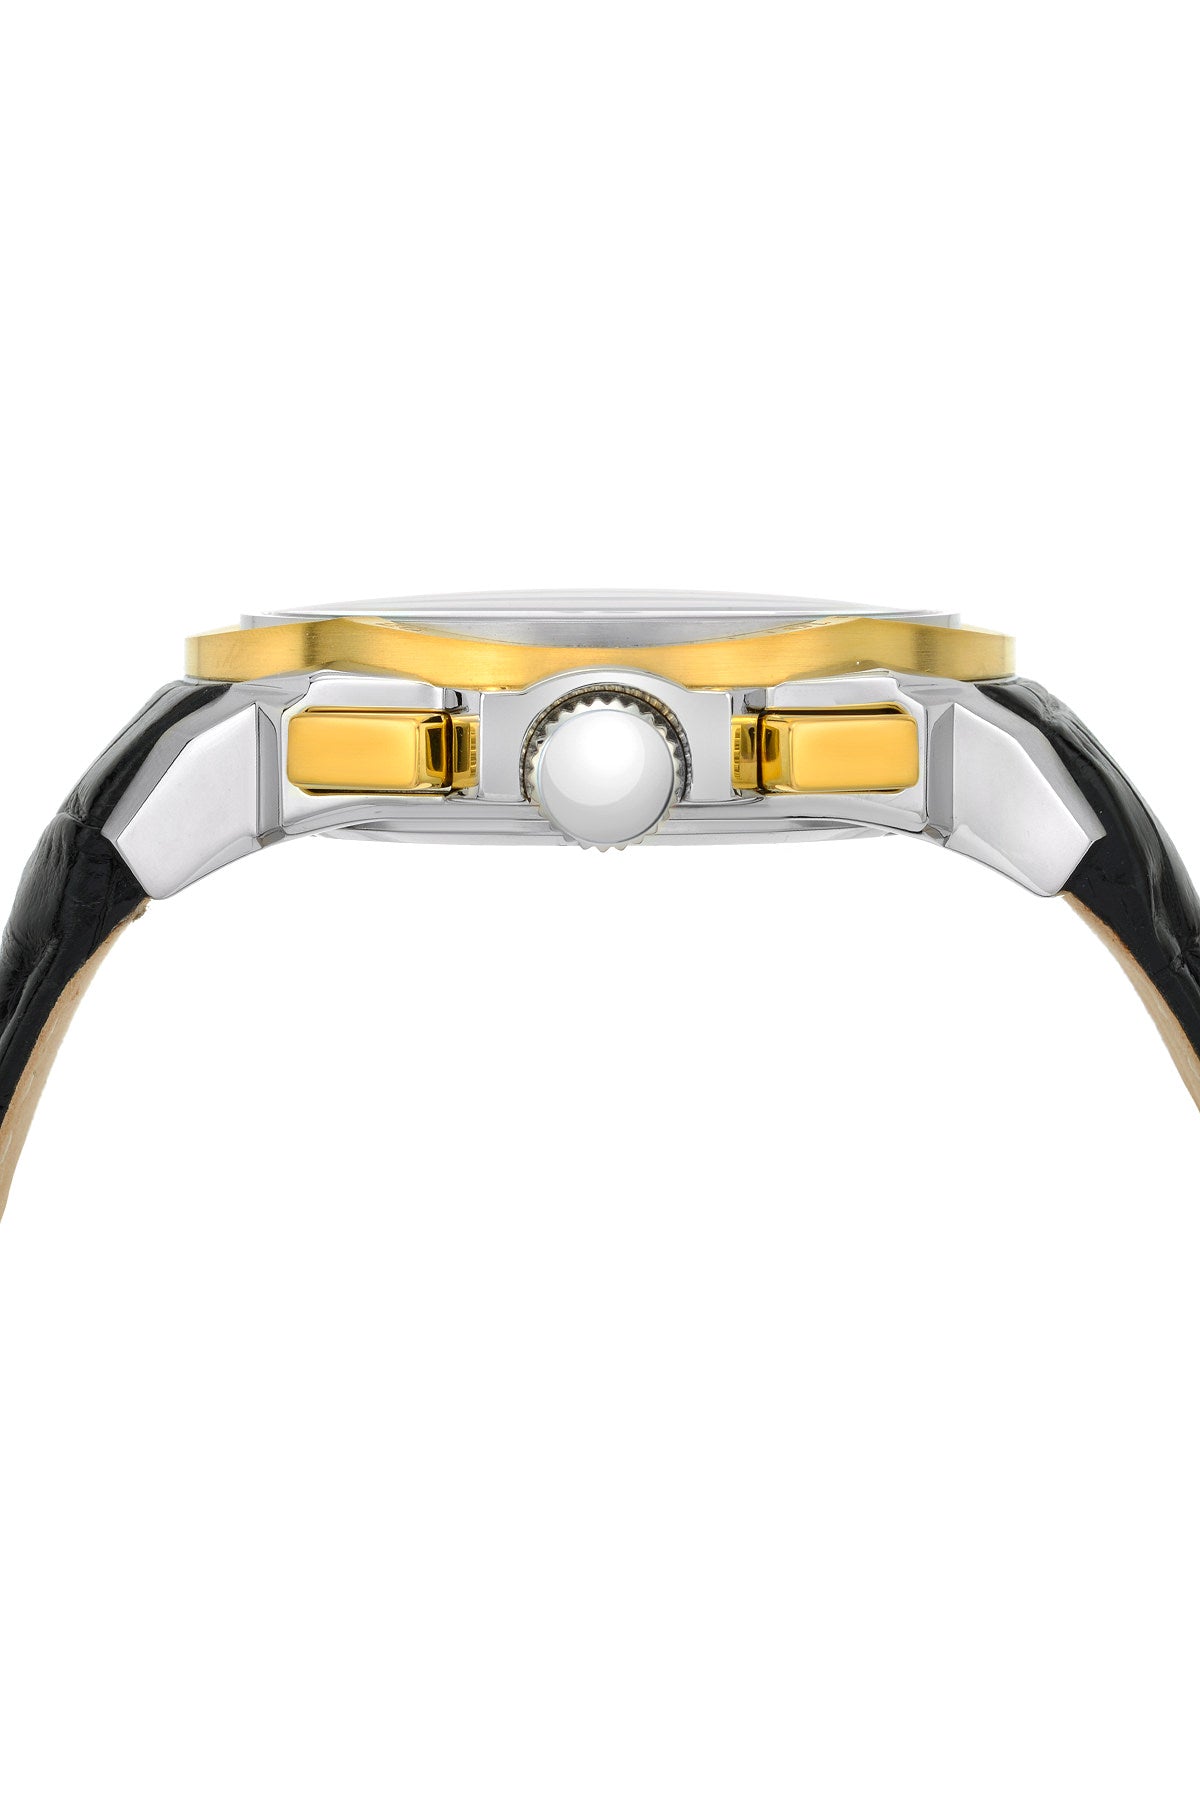 Porsamo Bleu Olivier luxury chronograph men's watch, genuine leather band, gold, black 322COLL